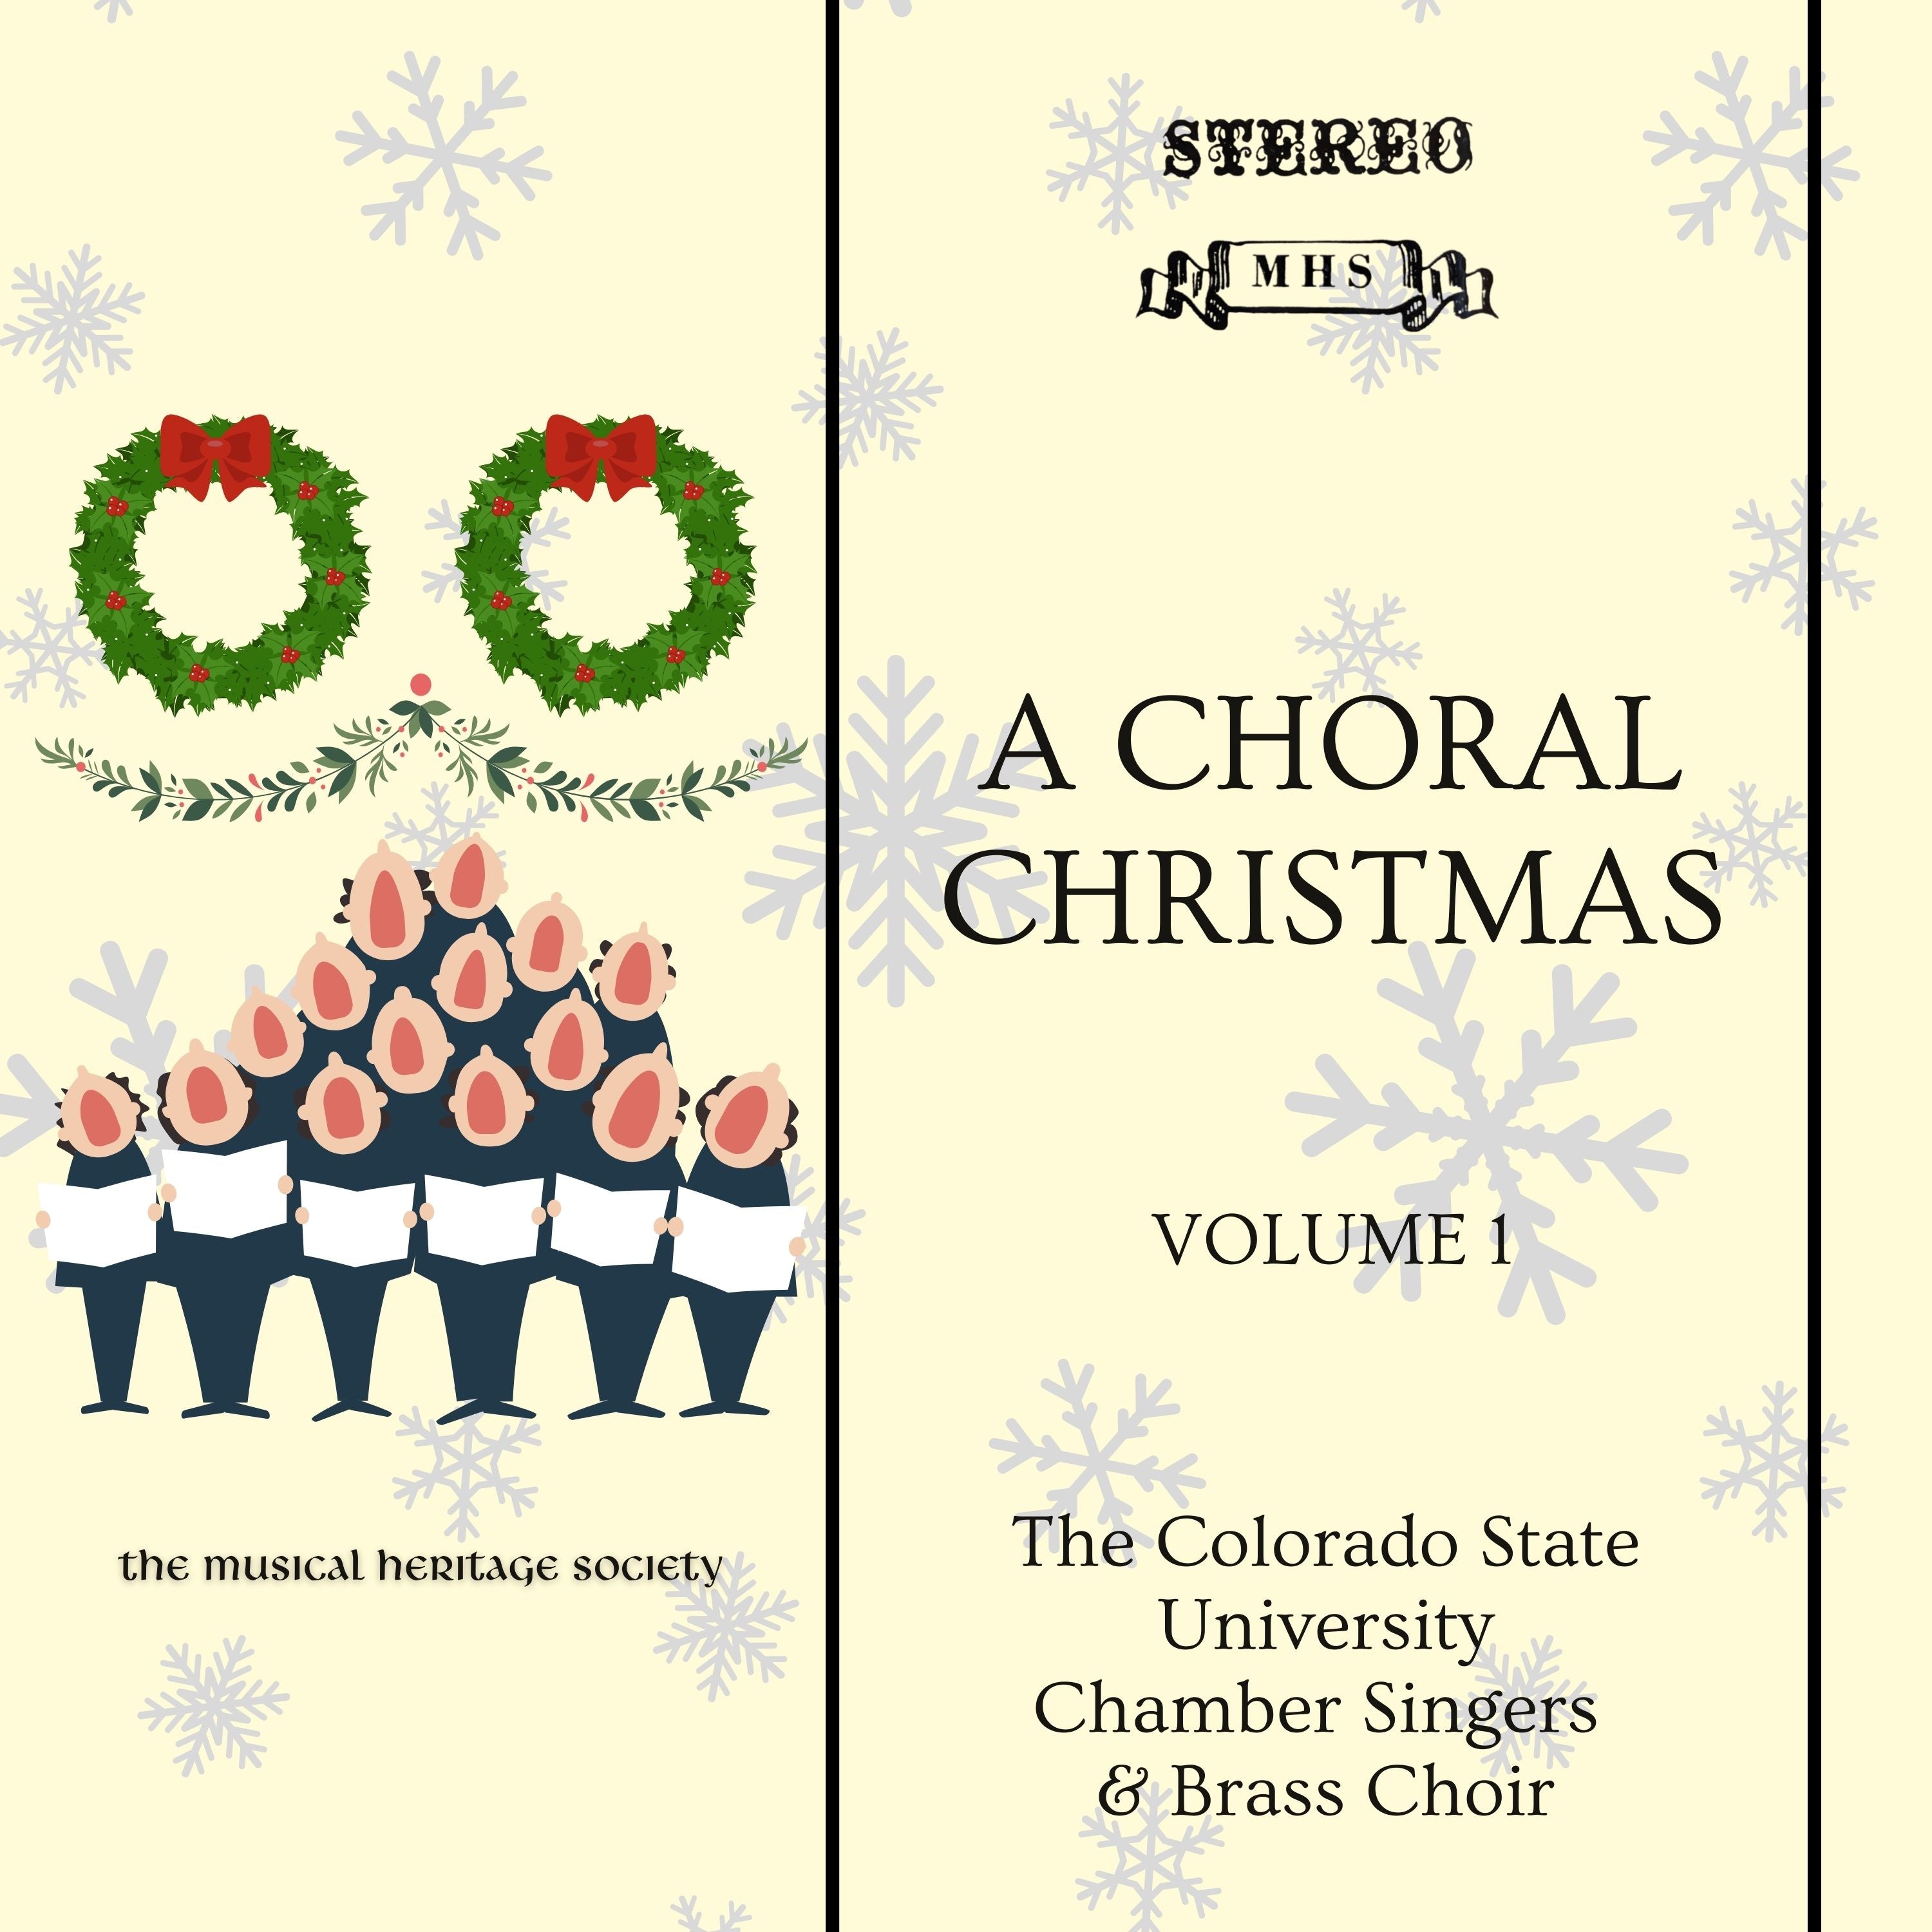 A CHORAL CHRISTMAS, Volume 1 - Colorado State University Chamber Choir, Brass Choir and Organ